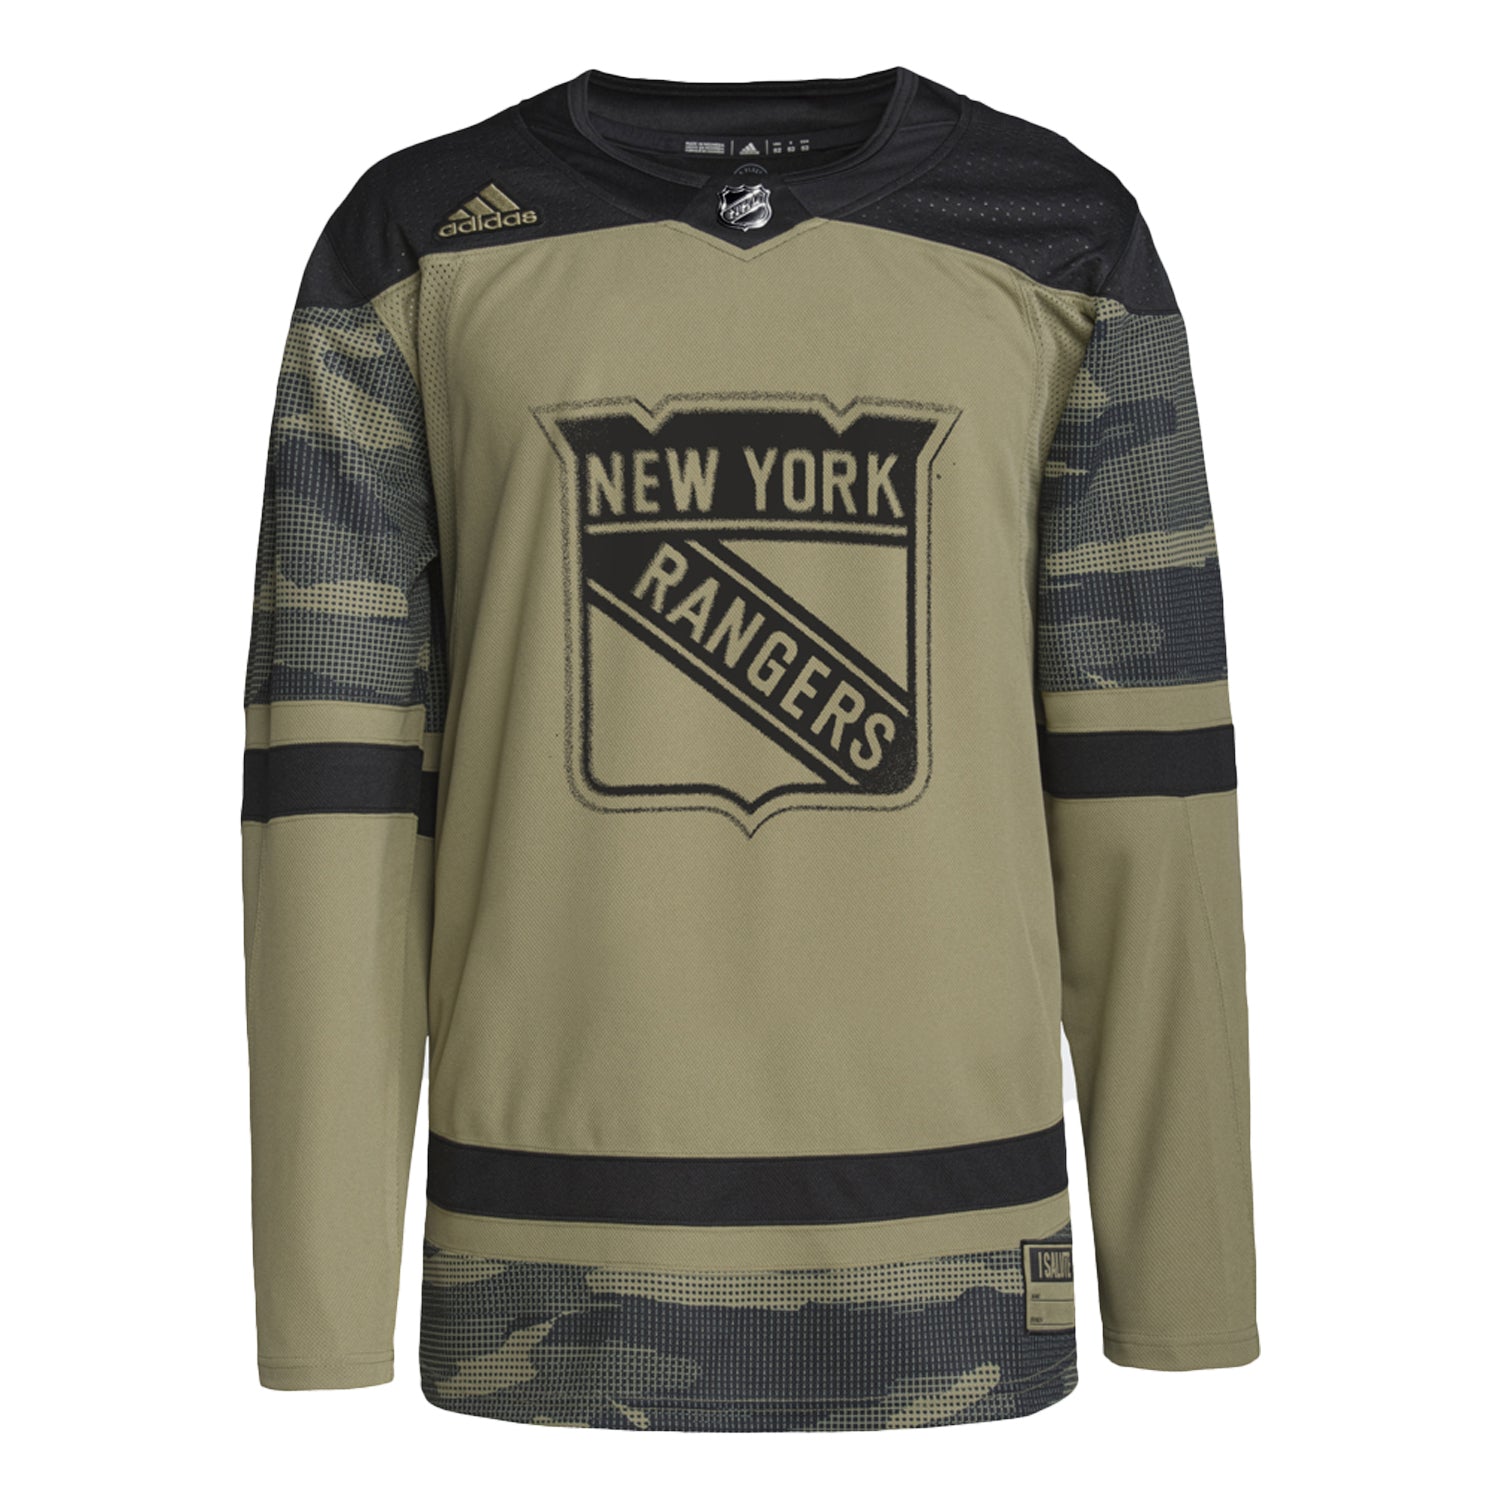 New York Rangers Away Hockey Tank - S / White / Polyester